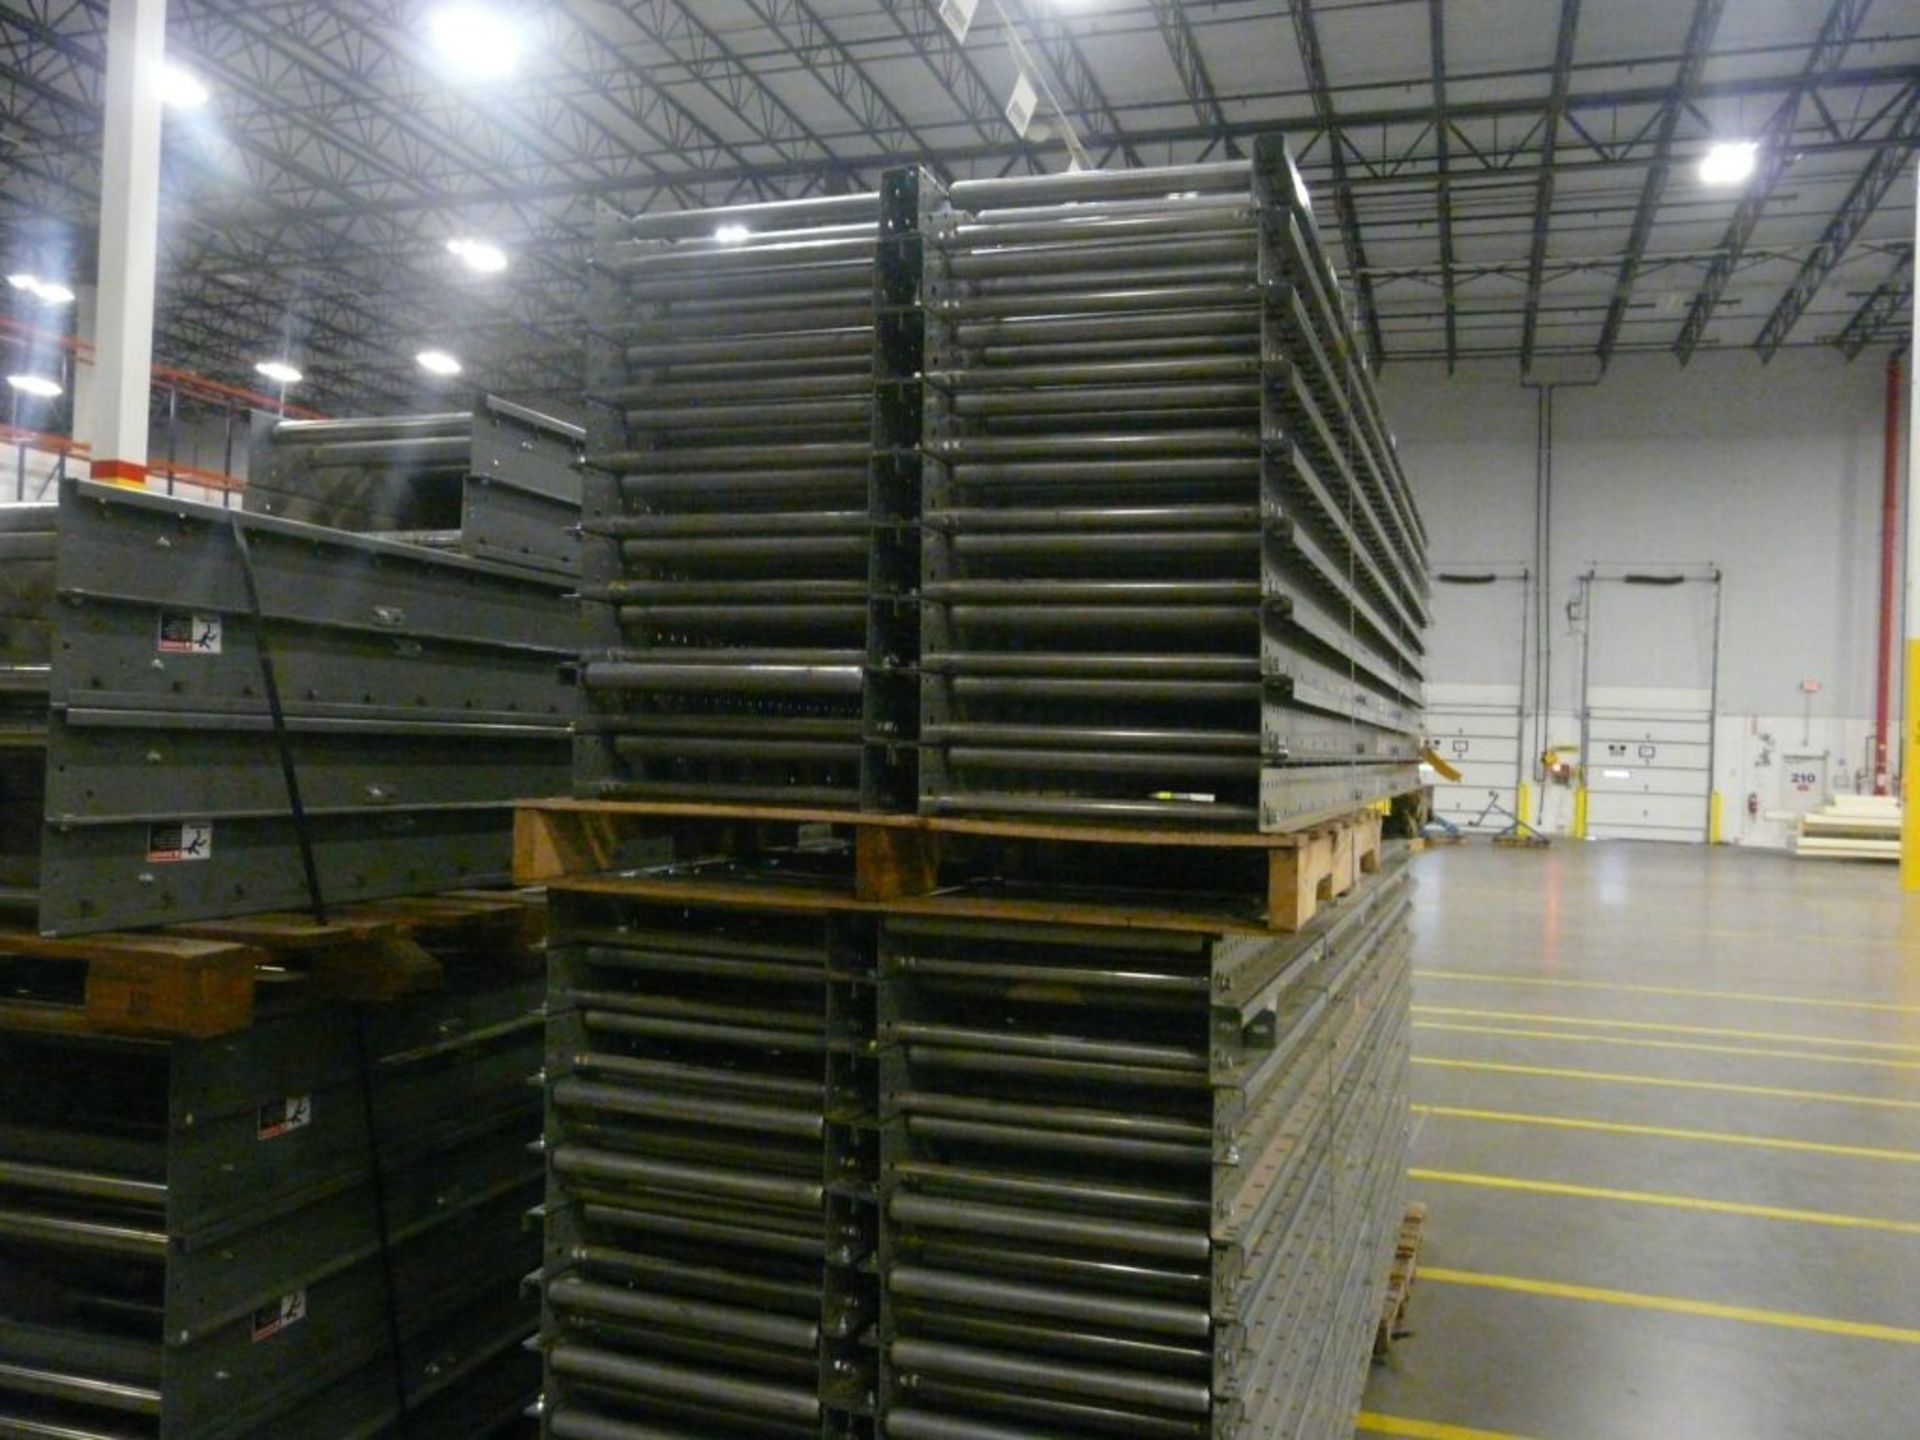 Lot of (12) 140 Belt Intermediate Conveyors - 12'L x 16"W; Tag: 223661 - $30 Lot Loading Fee - Image 2 of 3